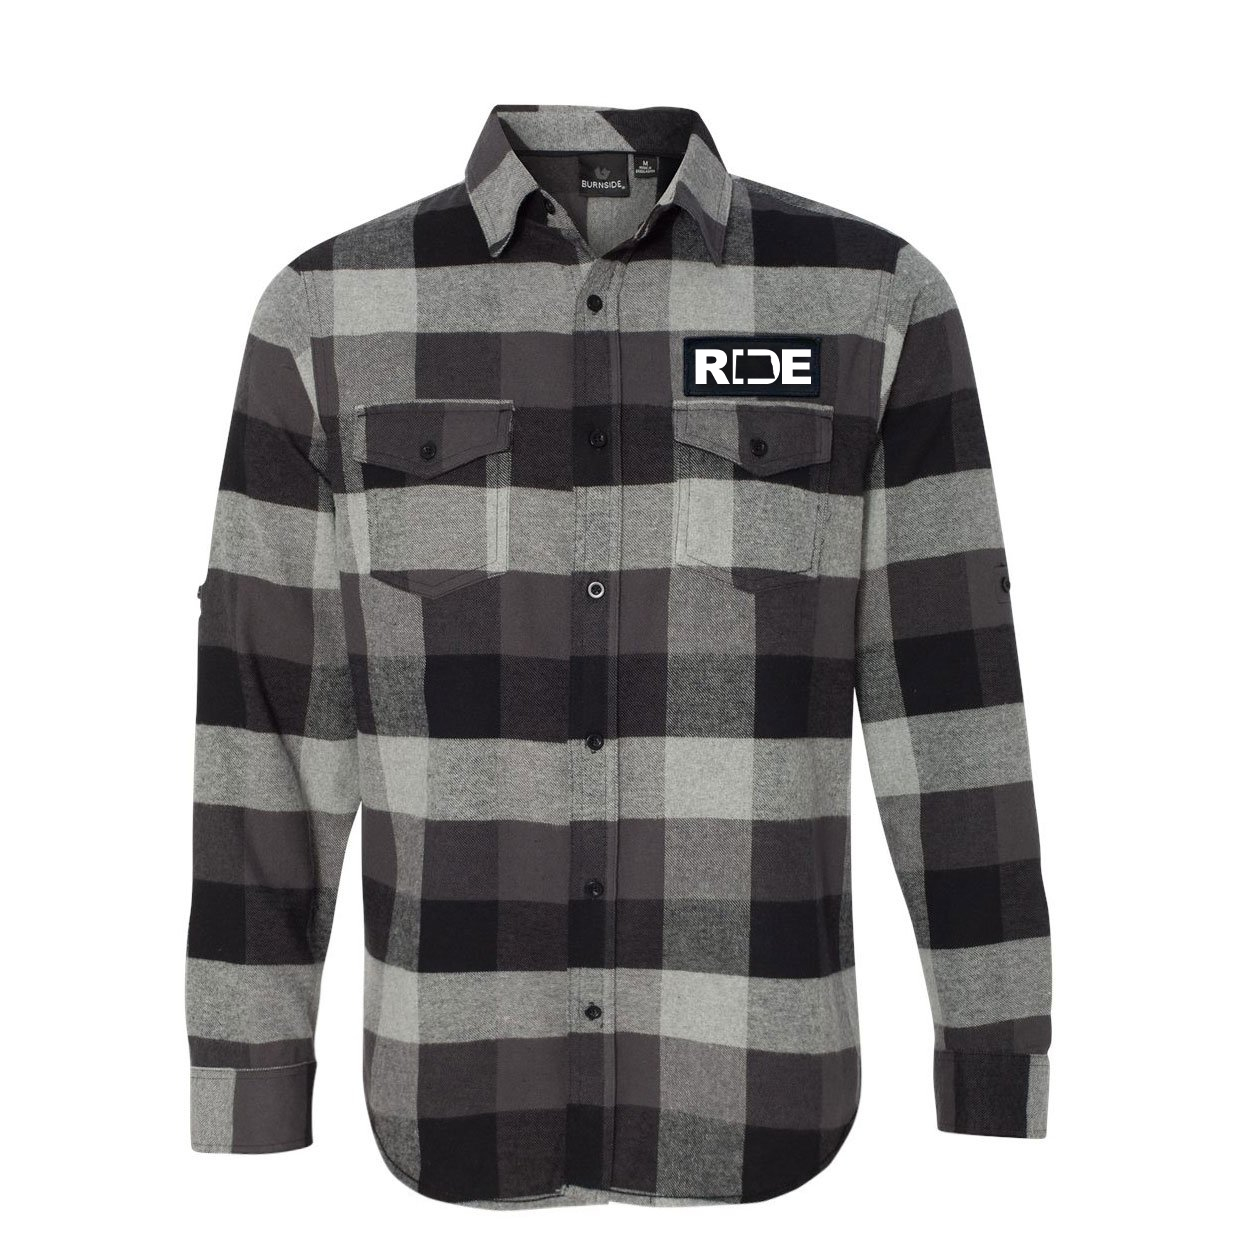 Ride North Dakota Classic Unisex Long Sleeve Woven Patch Flannel Shirt Black/Gray (White Logo)